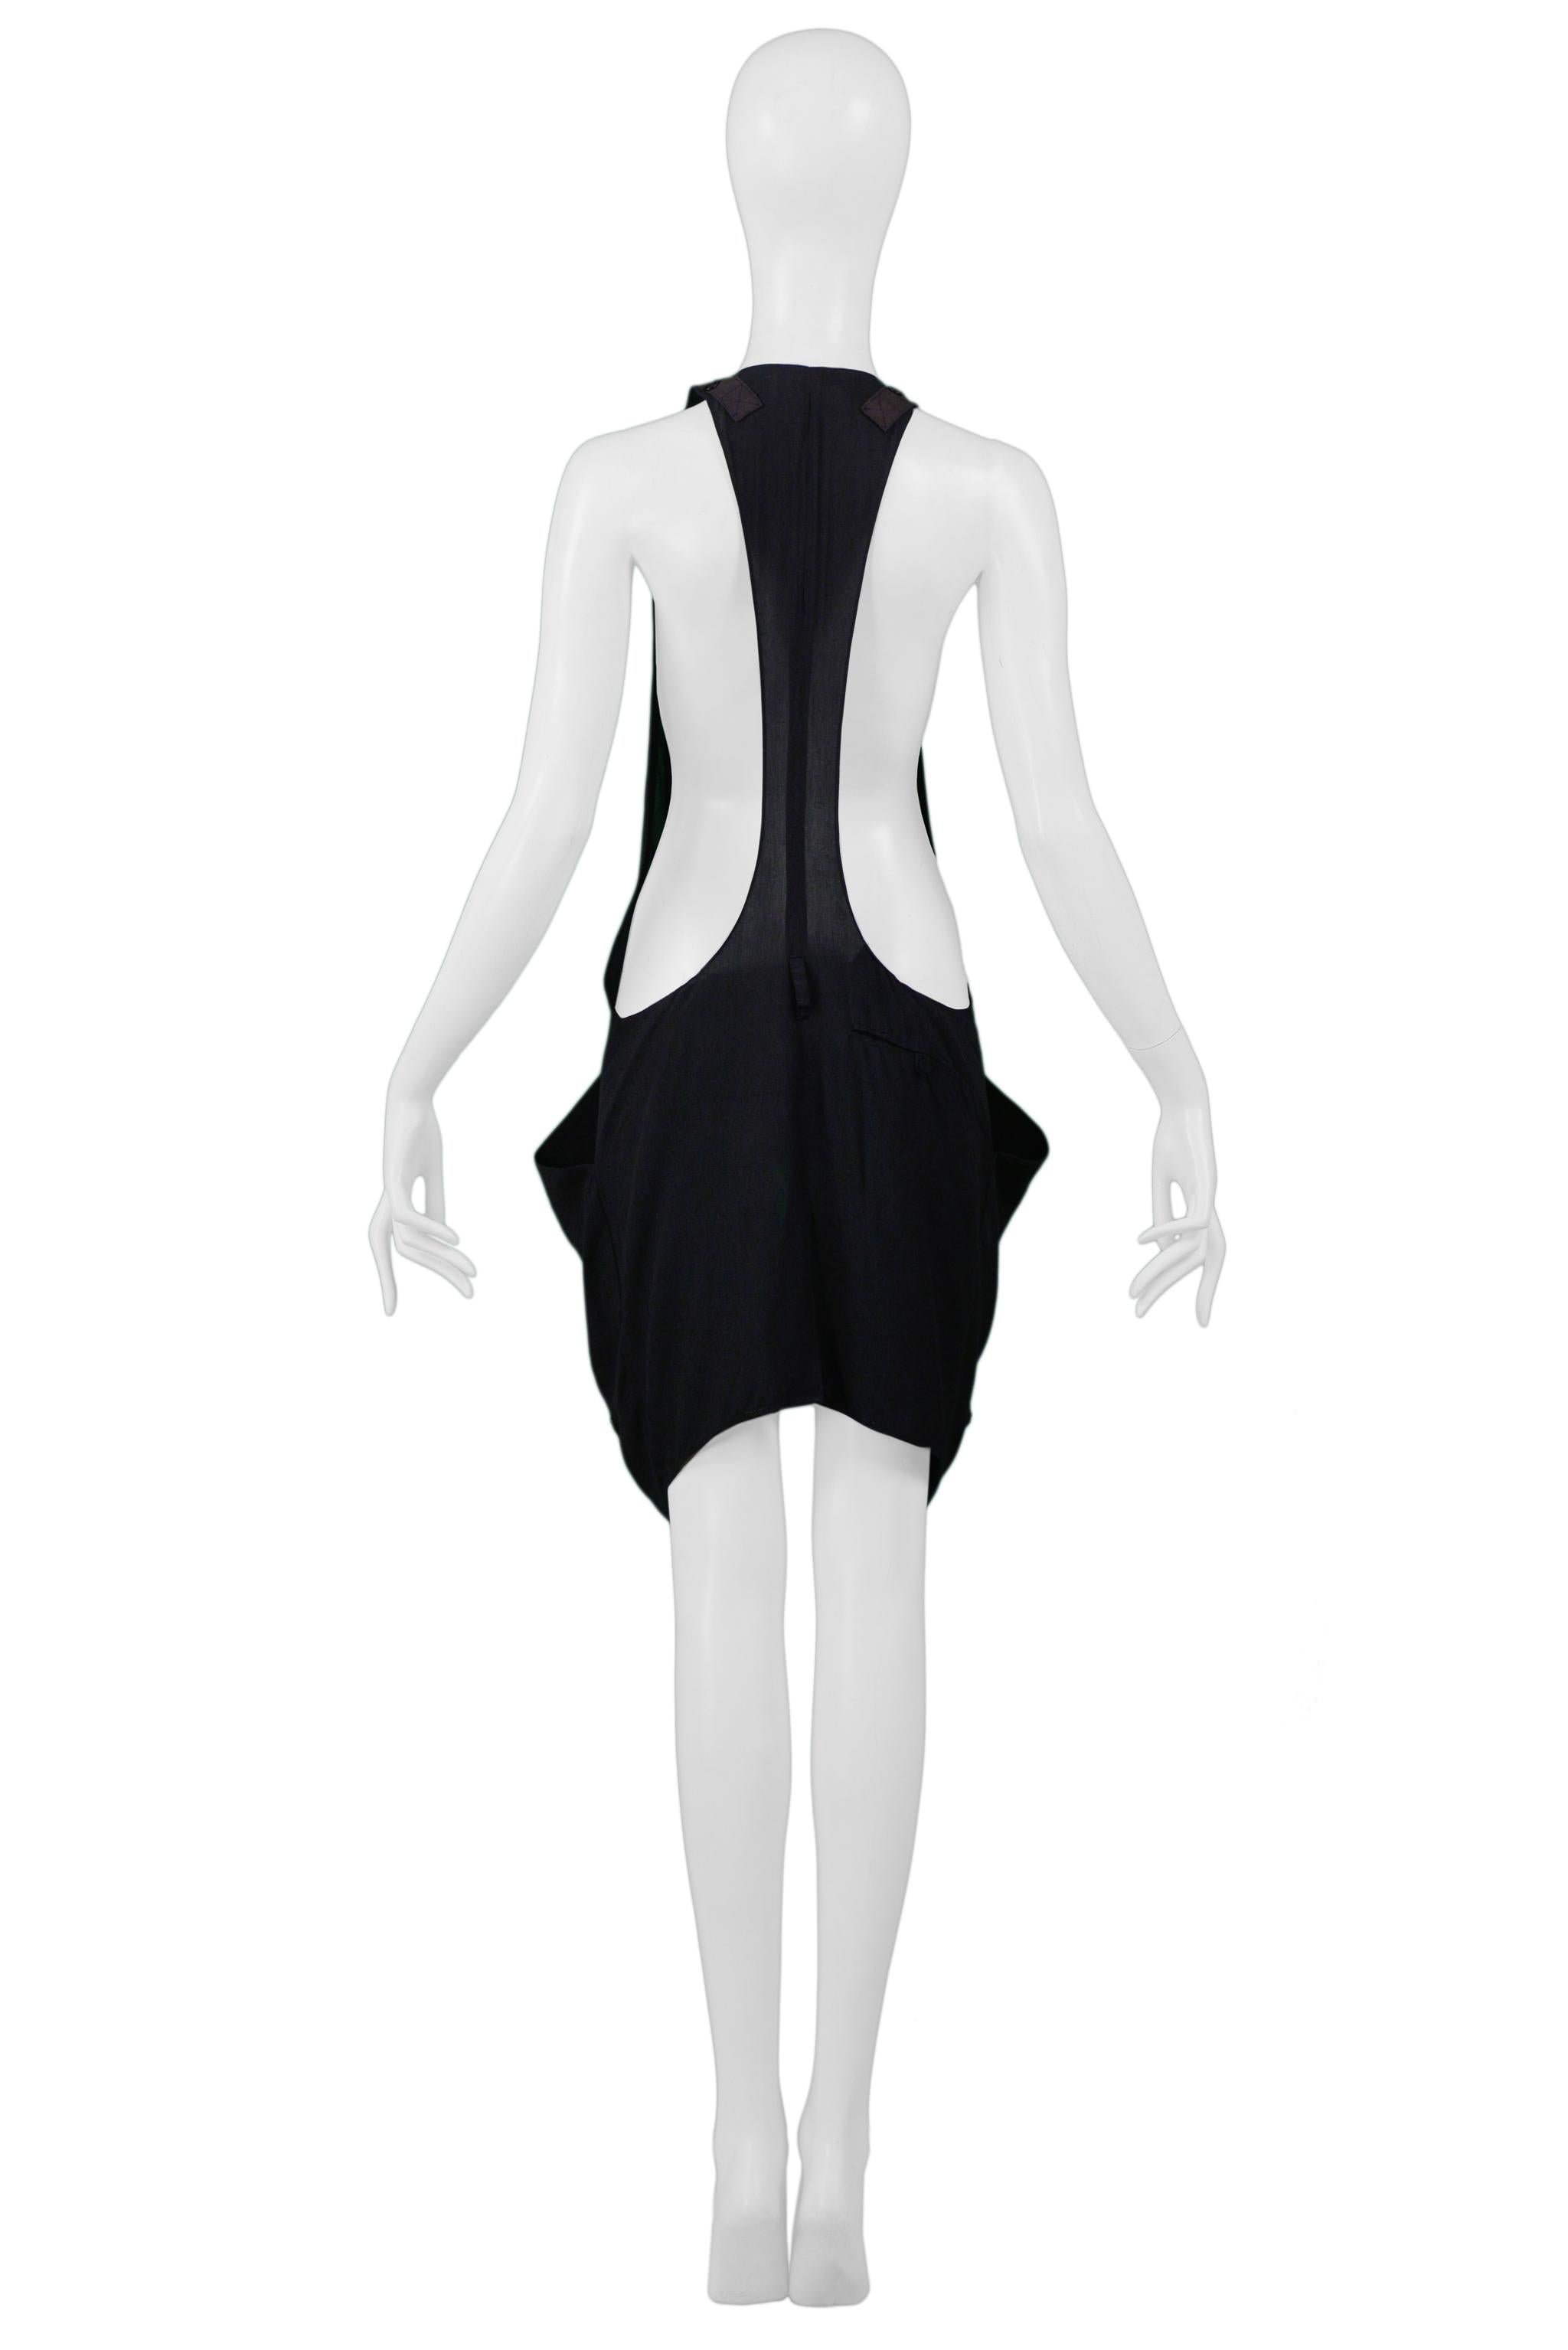 Rare & Iconic Balenciaga by Nicolas Ghesquiere Corset Vest Top 2002 In Excellent Condition For Sale In Los Angeles, CA